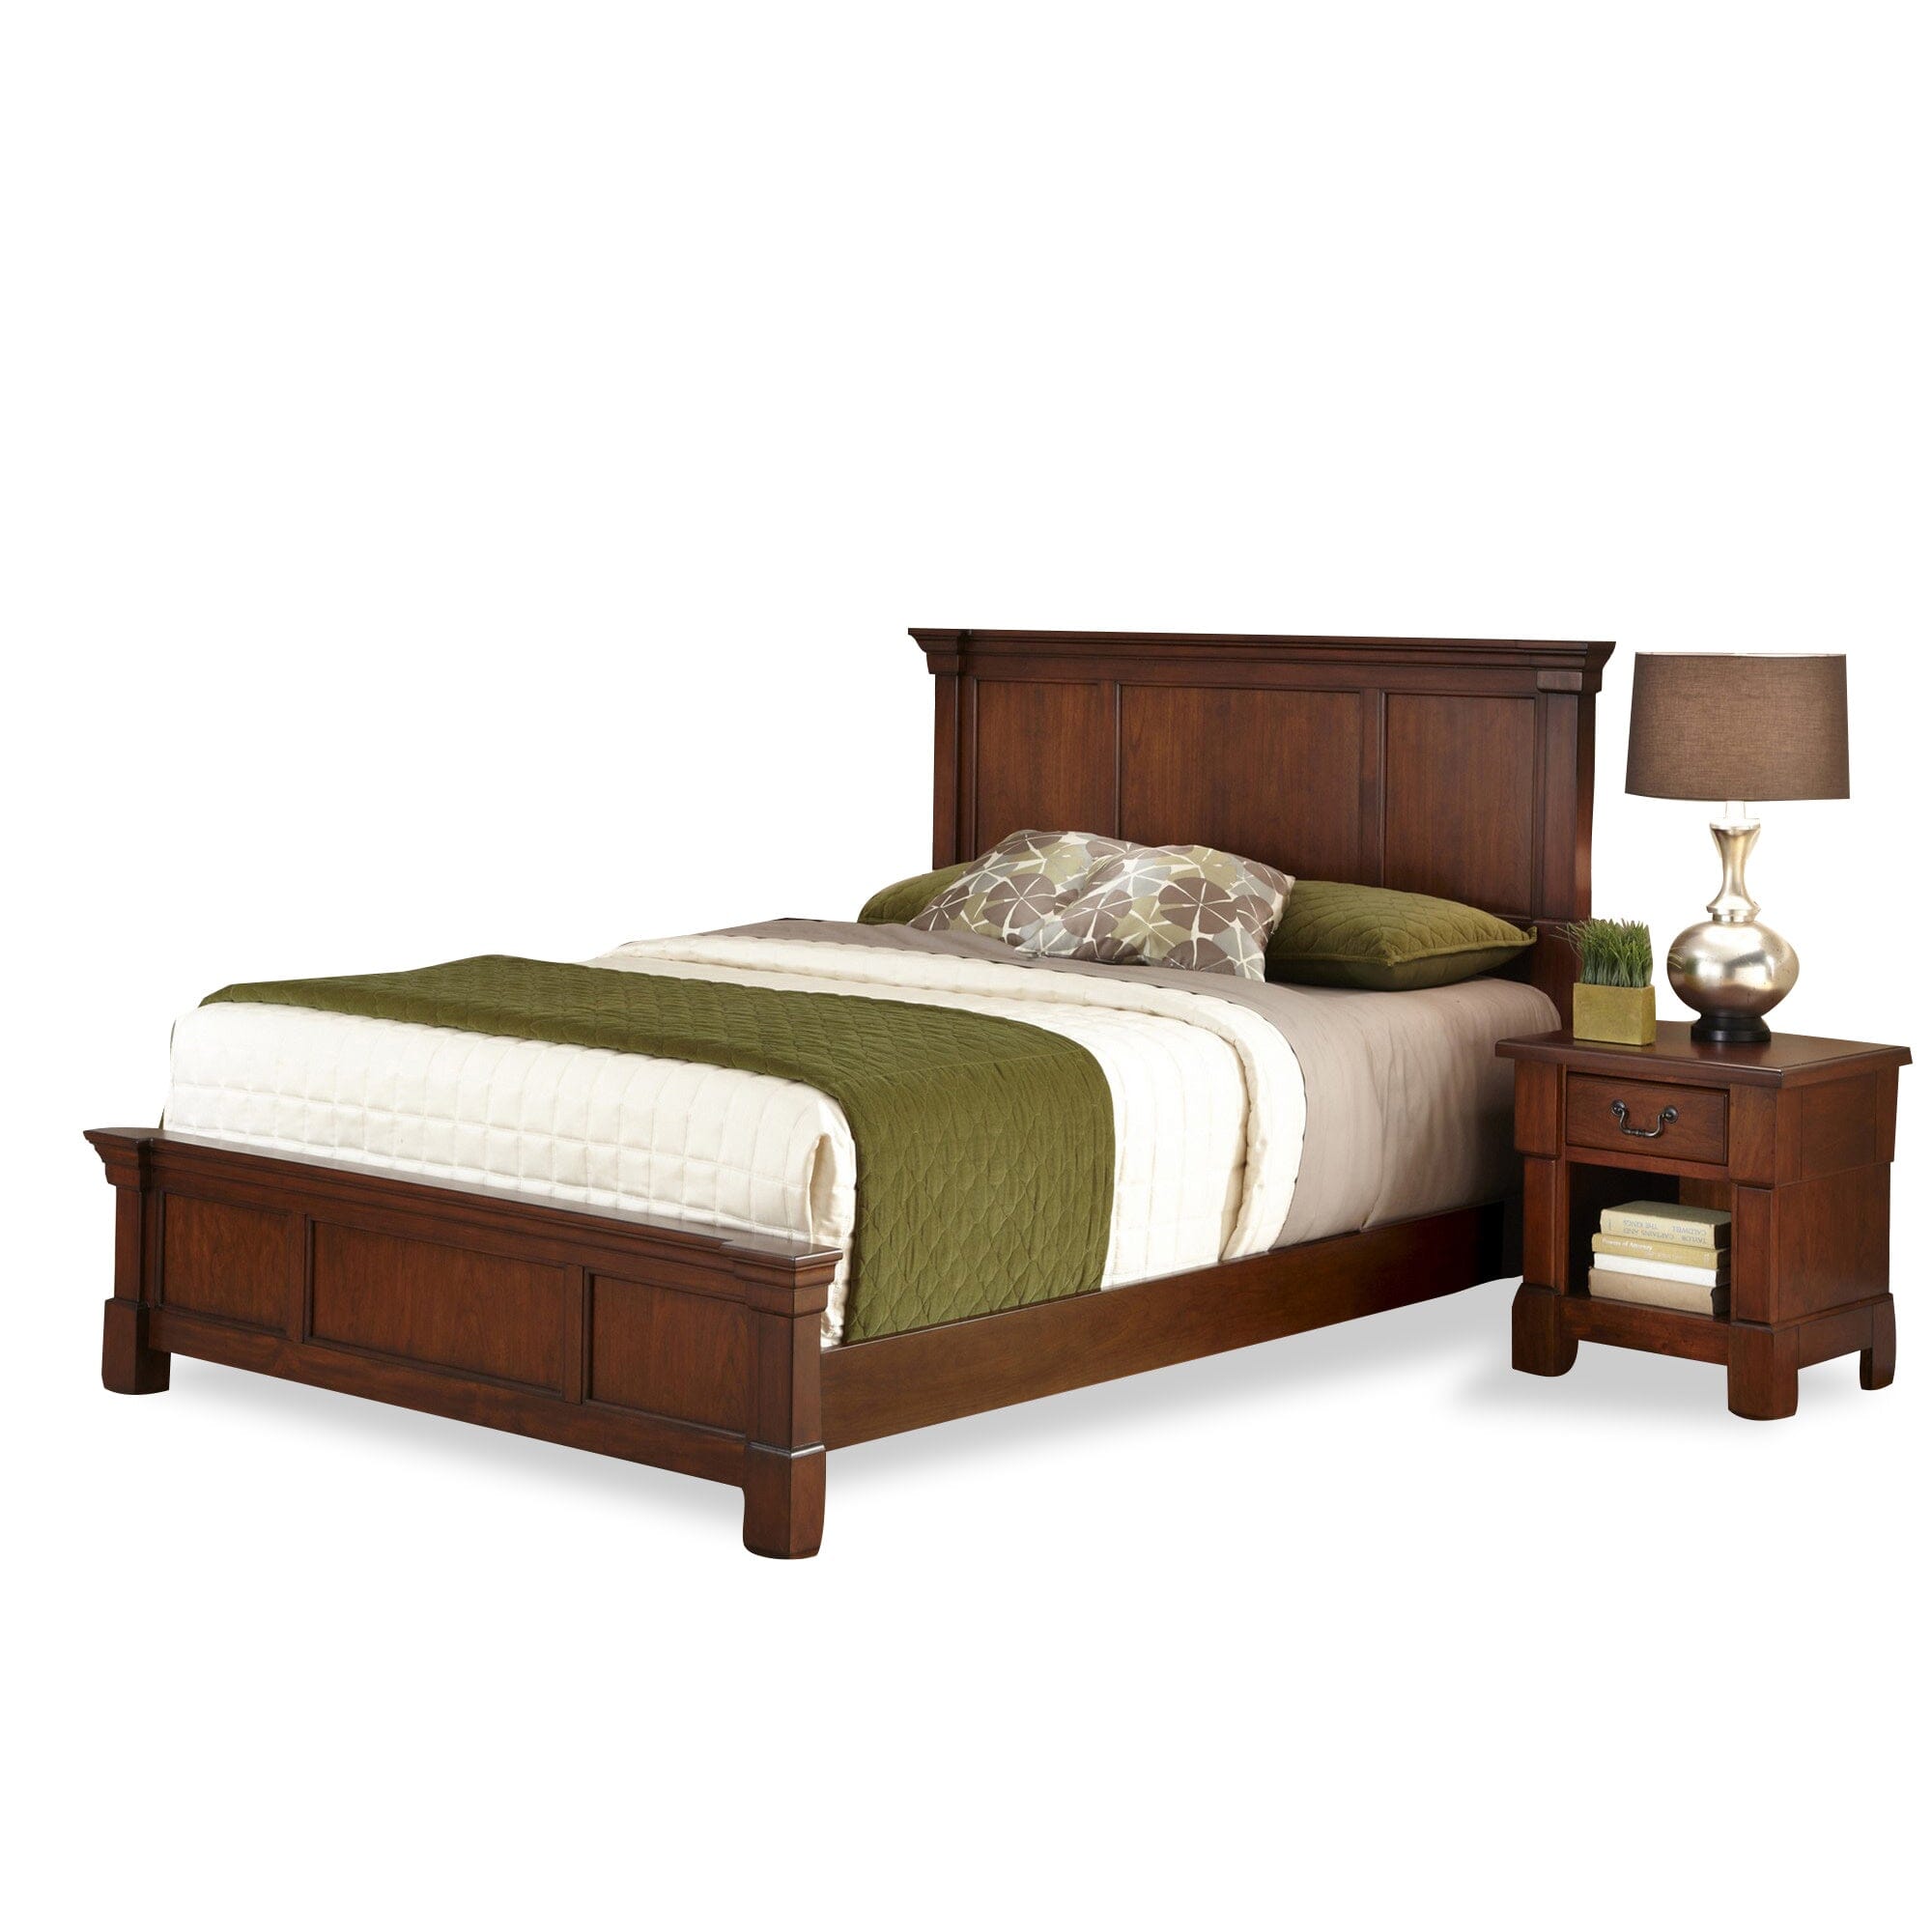 Traditional Queen Bed and Nightstand By Aspen Queen Bed Aspen